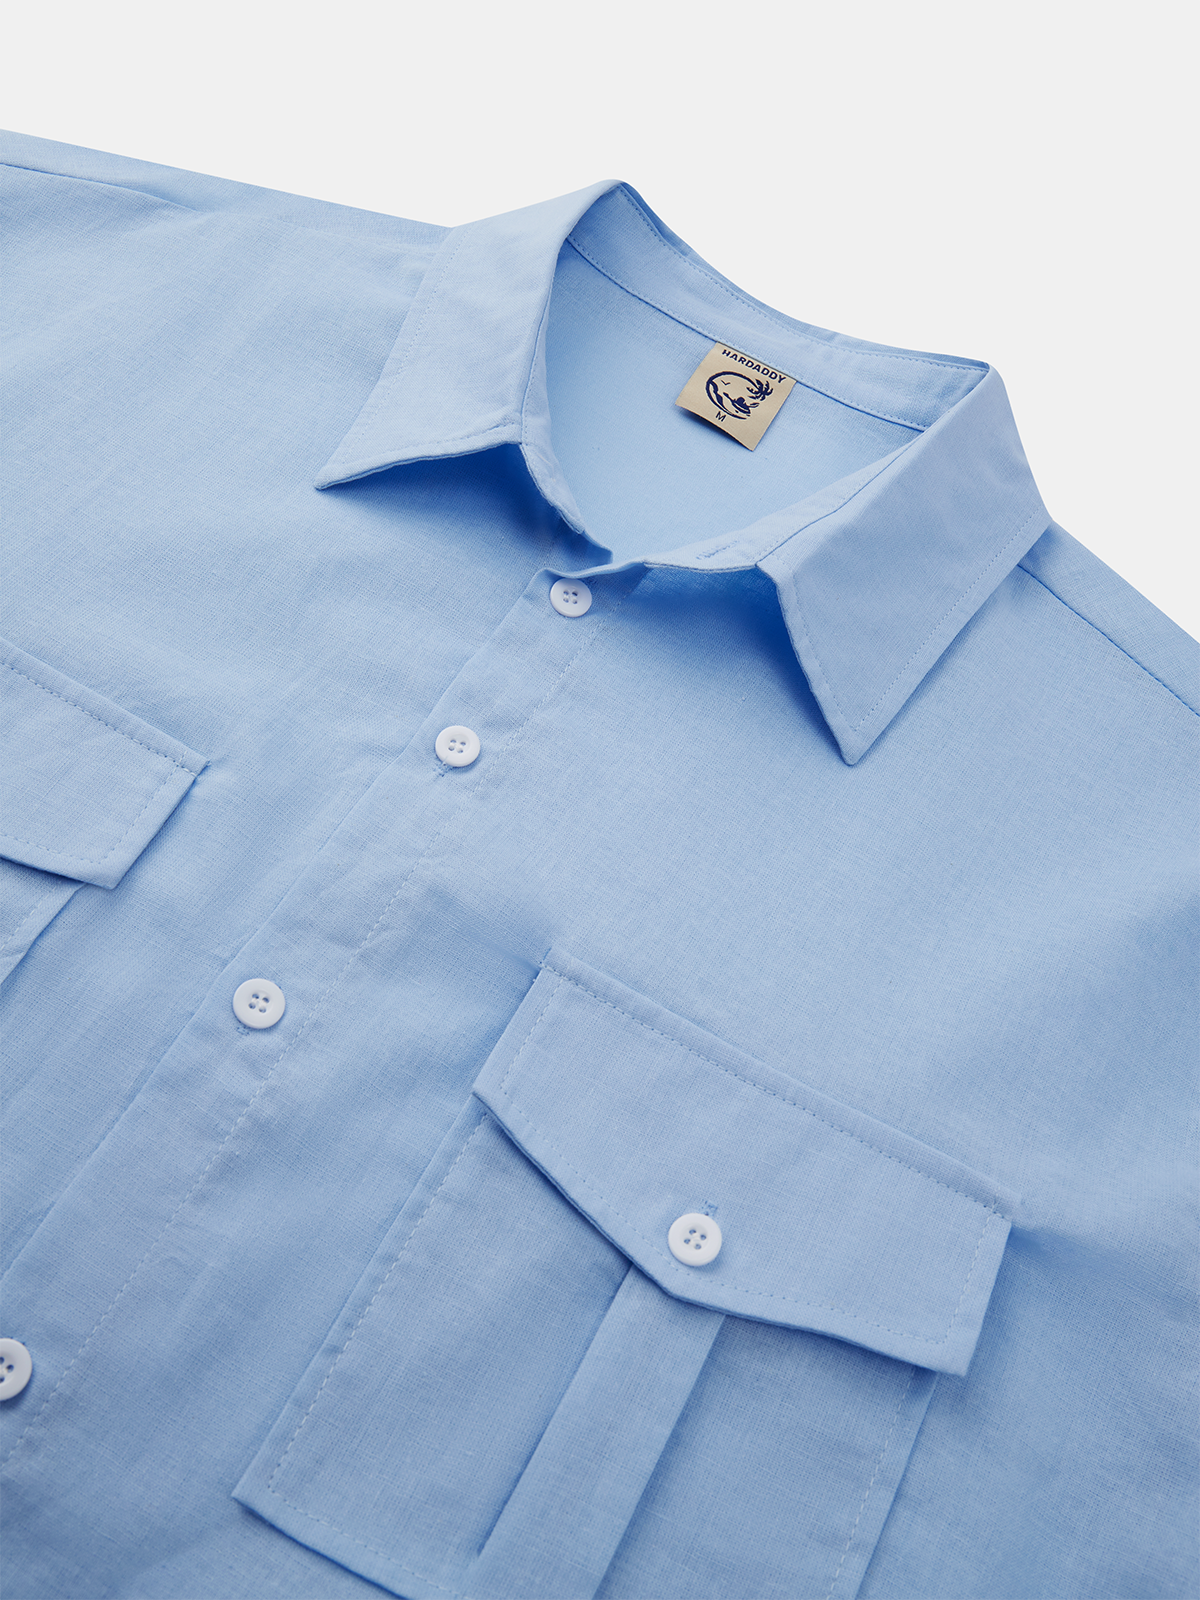 Hardaddy Cotton Plain Box Pleated Short Sleeve Casual Shirt